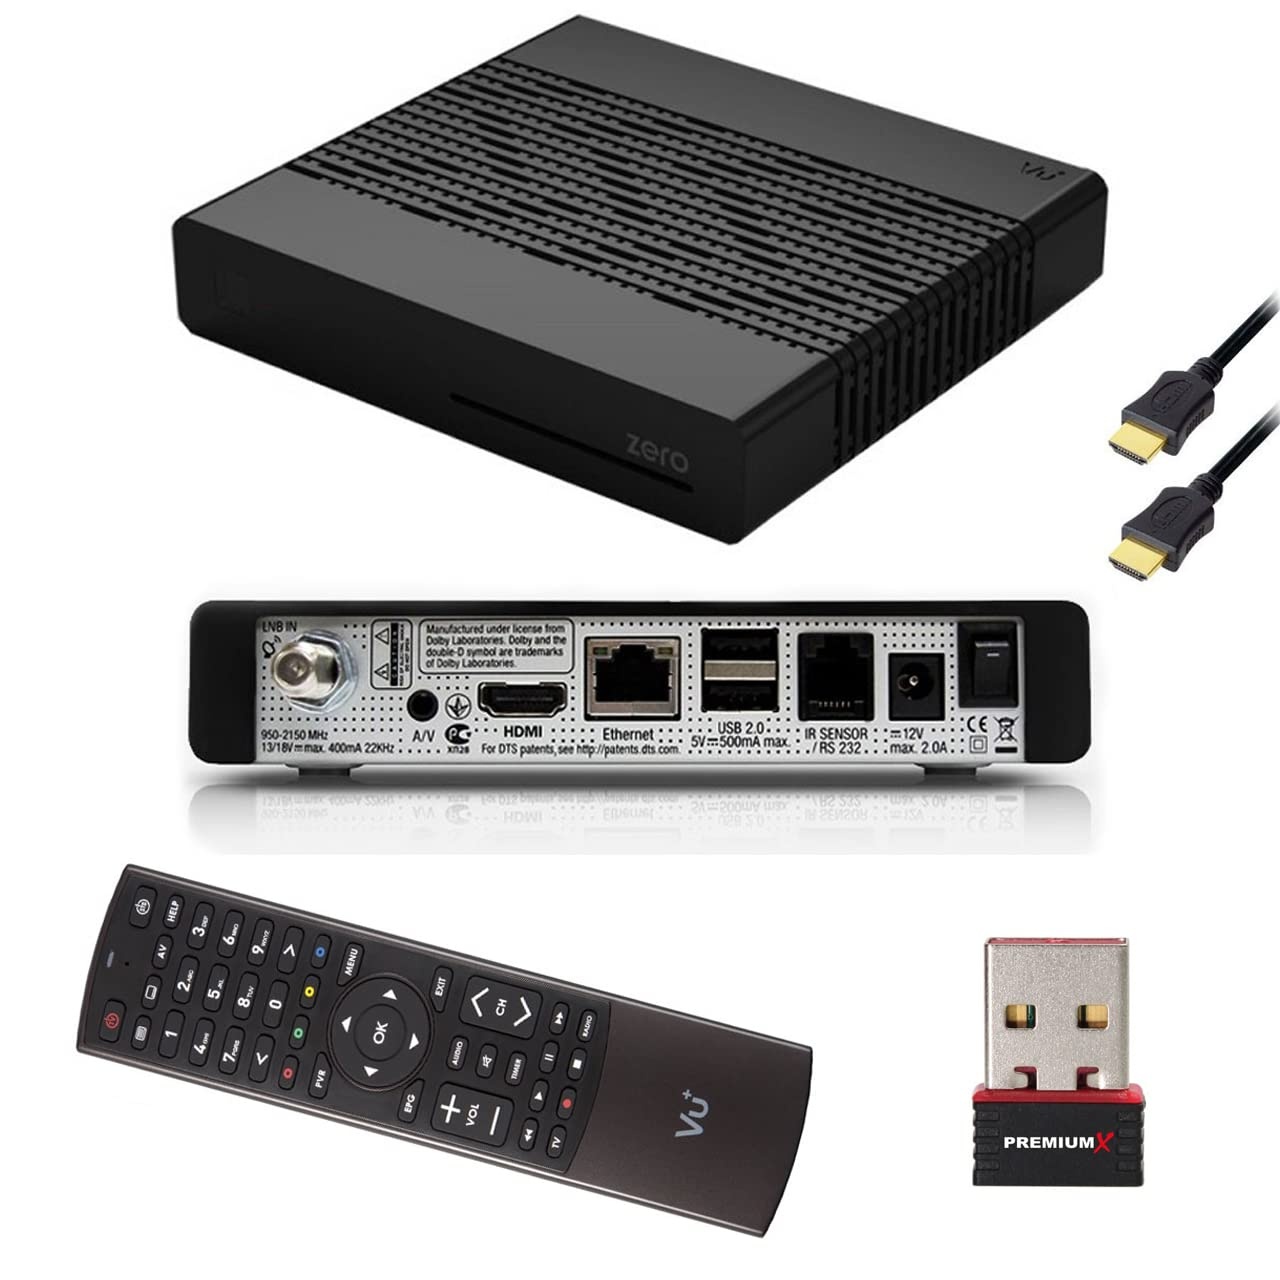 VU+ Zero Black DVB-S2 Sat Tuner Linux Satellit Receiver Full HD 12V Netzteil mit PremiumX Mini WiFi WLAN Stick bis zu 150 Mbit ́s